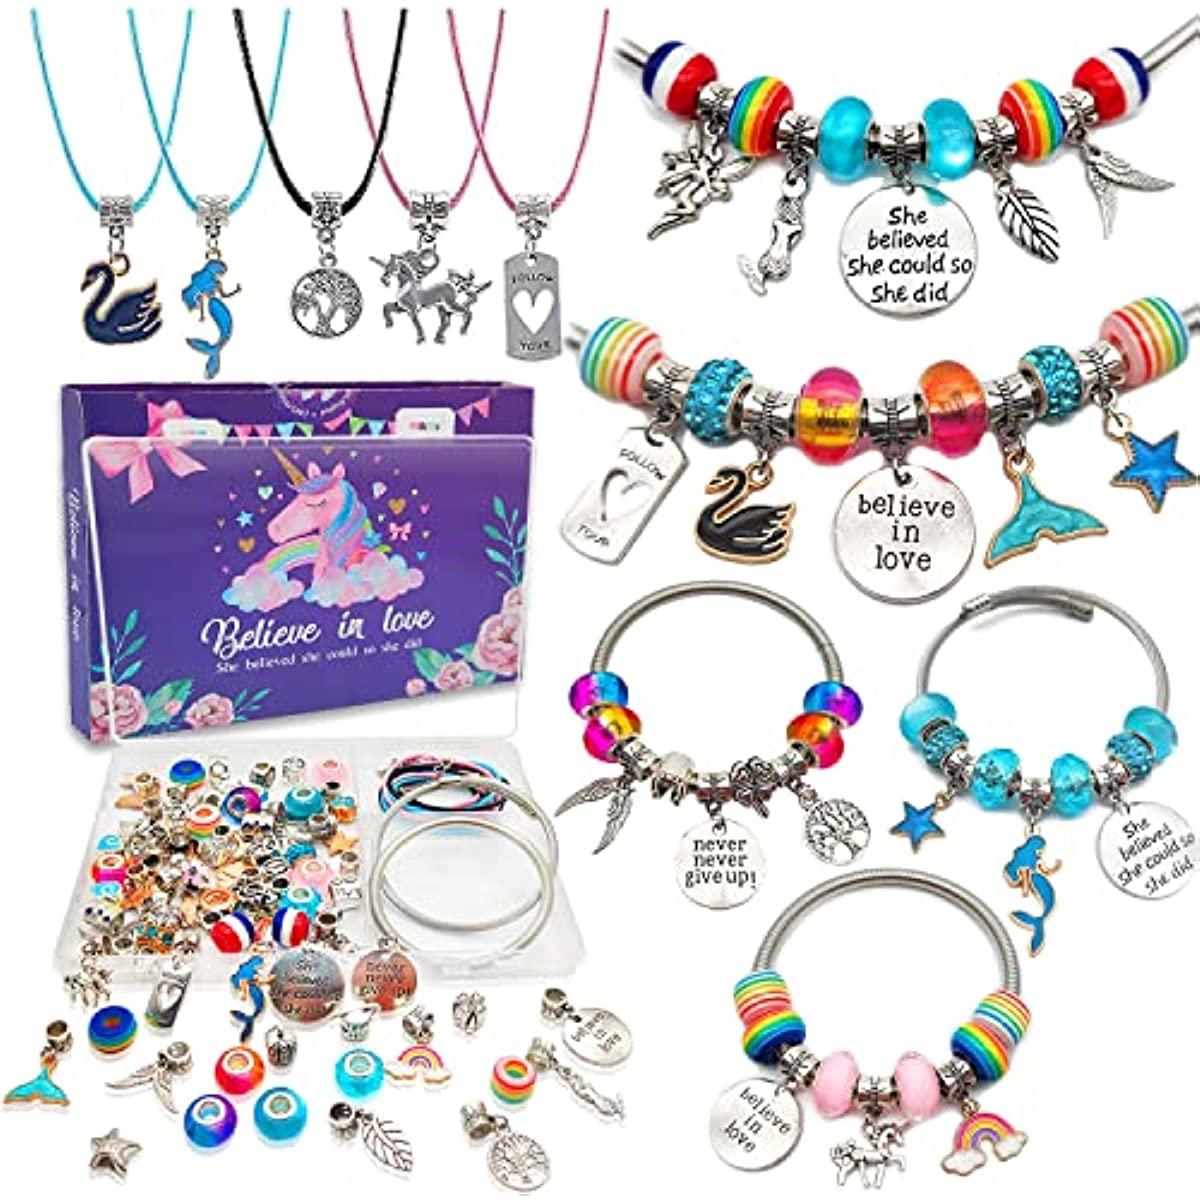 Friendship Bracelet Kit, Charming Bracelet Making Kits Beads DIY Craft  KitArts Crafts for Girls Aged 3-12